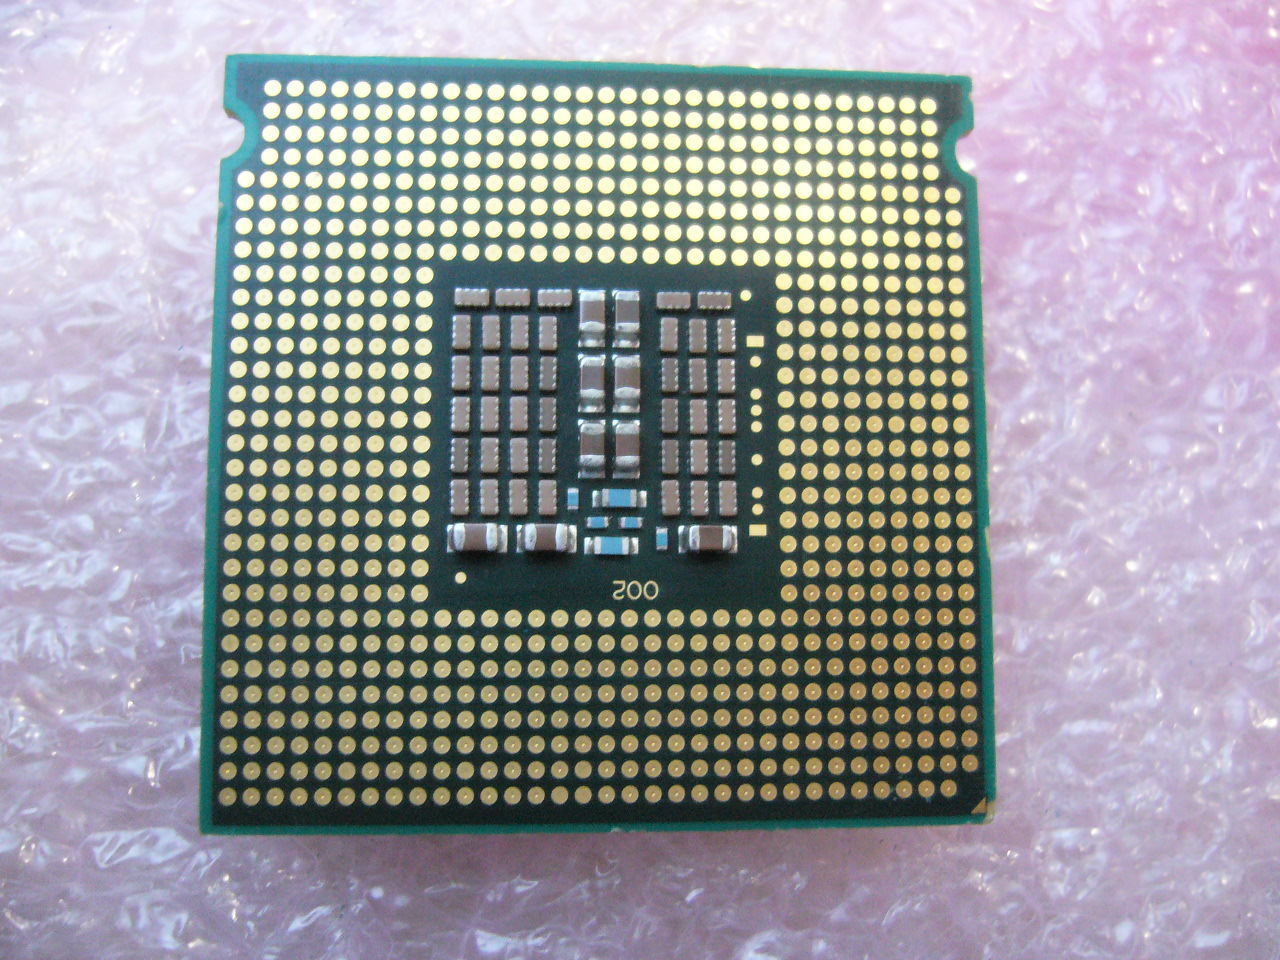 QTY 1x Intel Xeon CPU Quad Core L5430 2.66Ghz/12MB/1333Mhz LGA771 SLBBQ 50W - Click Image to Close